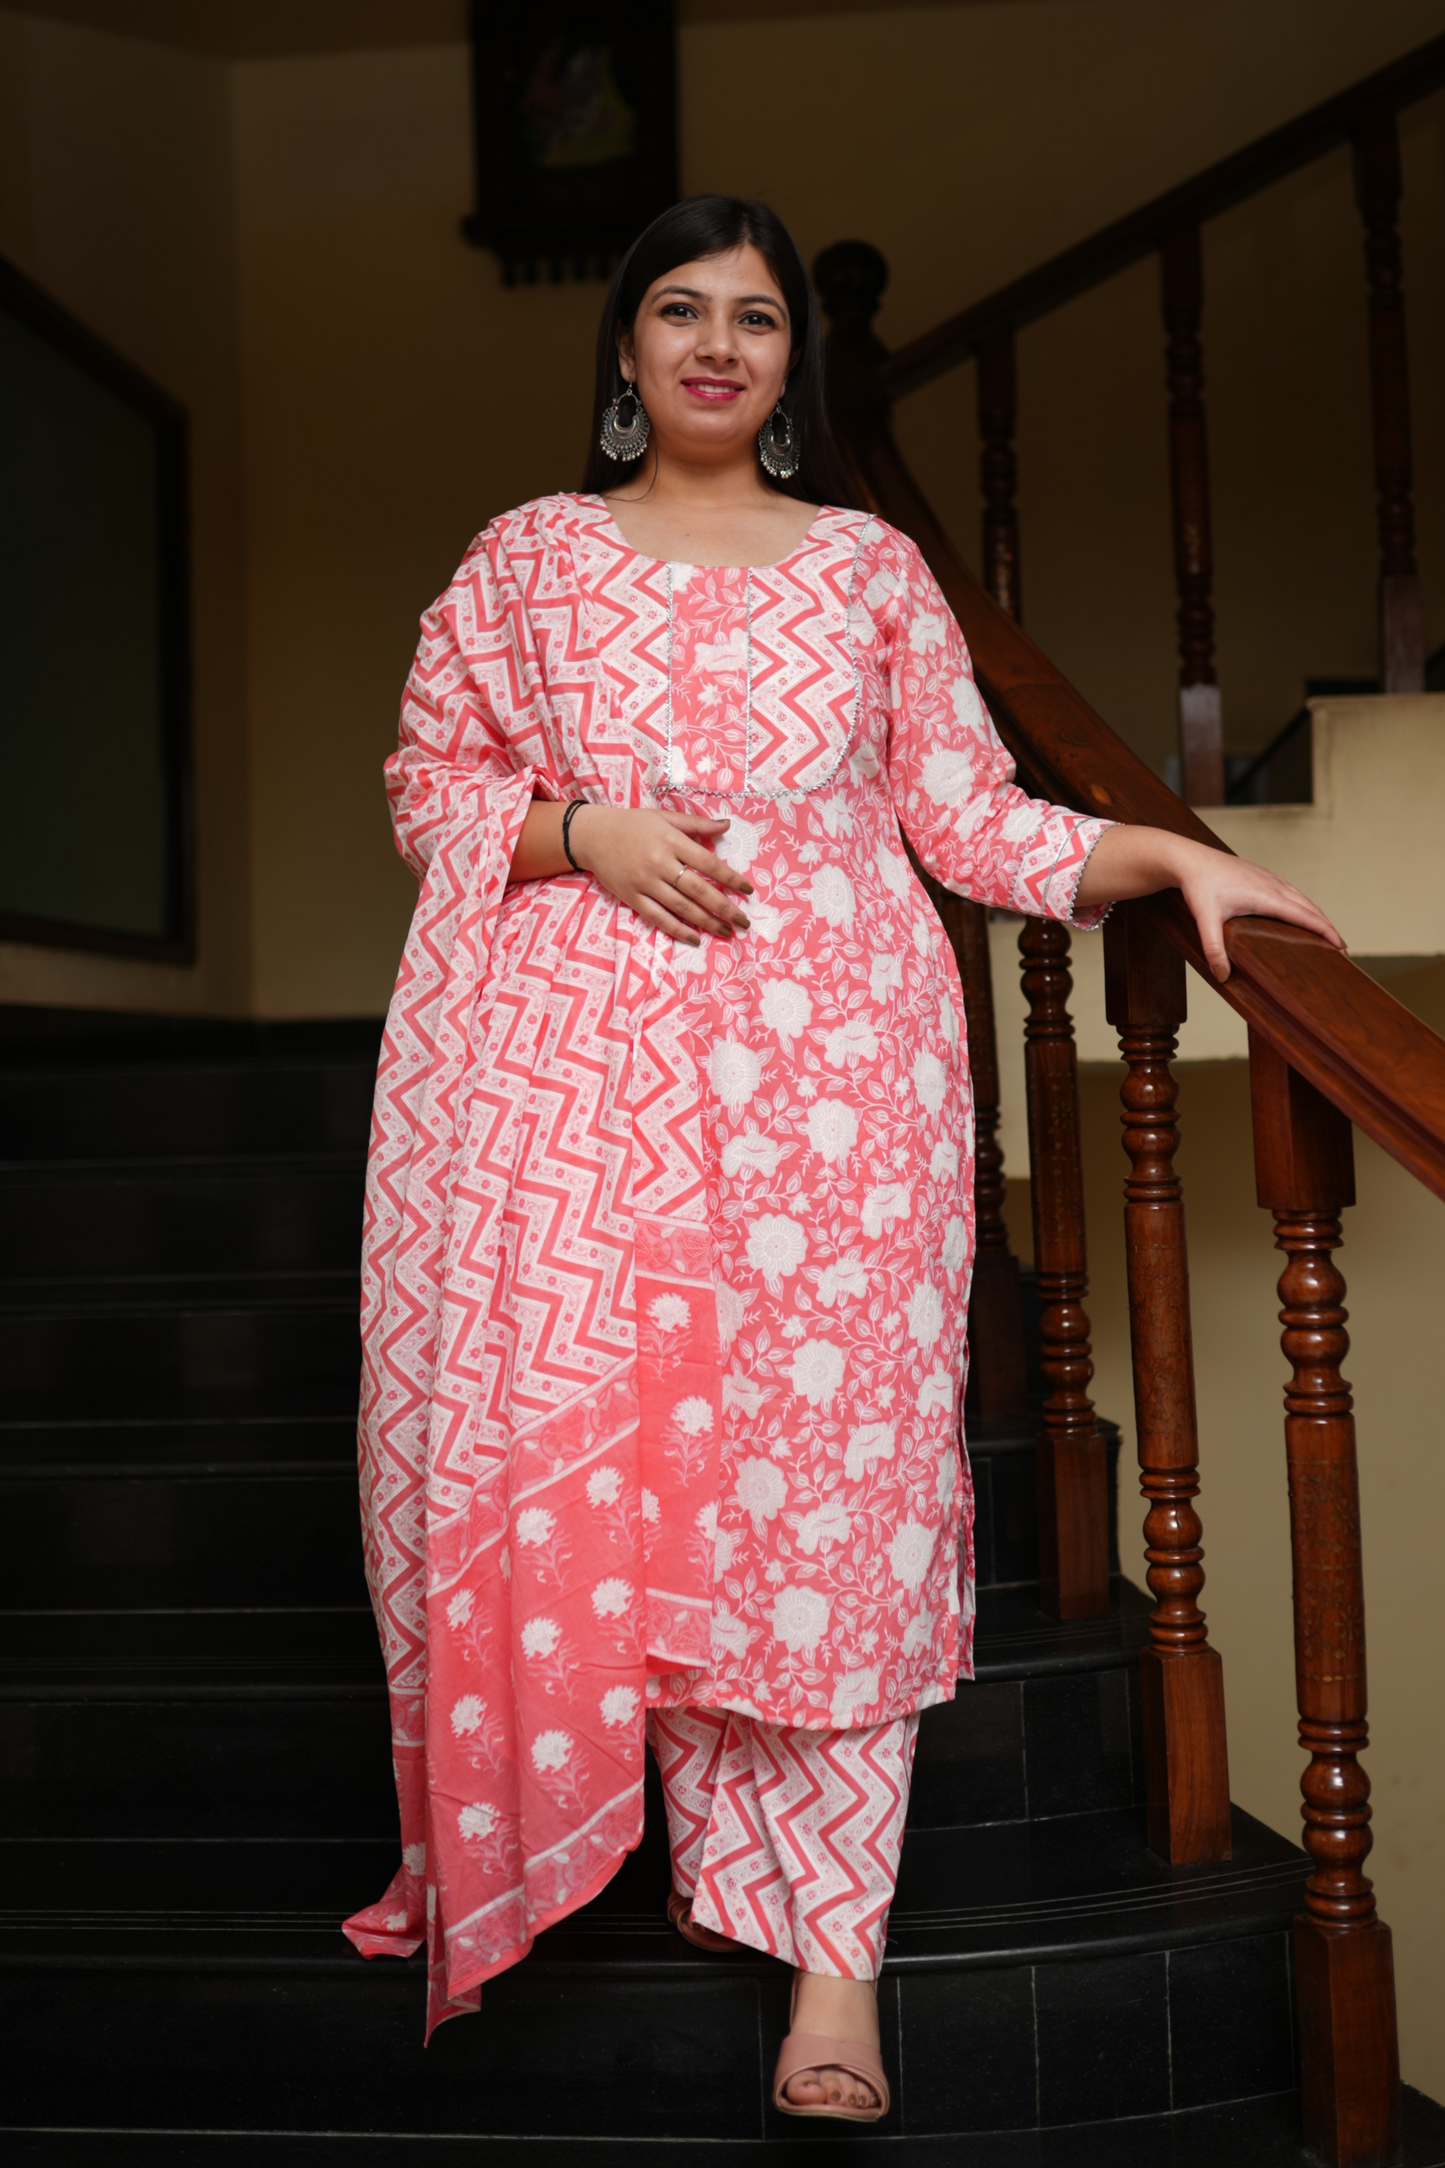 Designer Salwar Suit